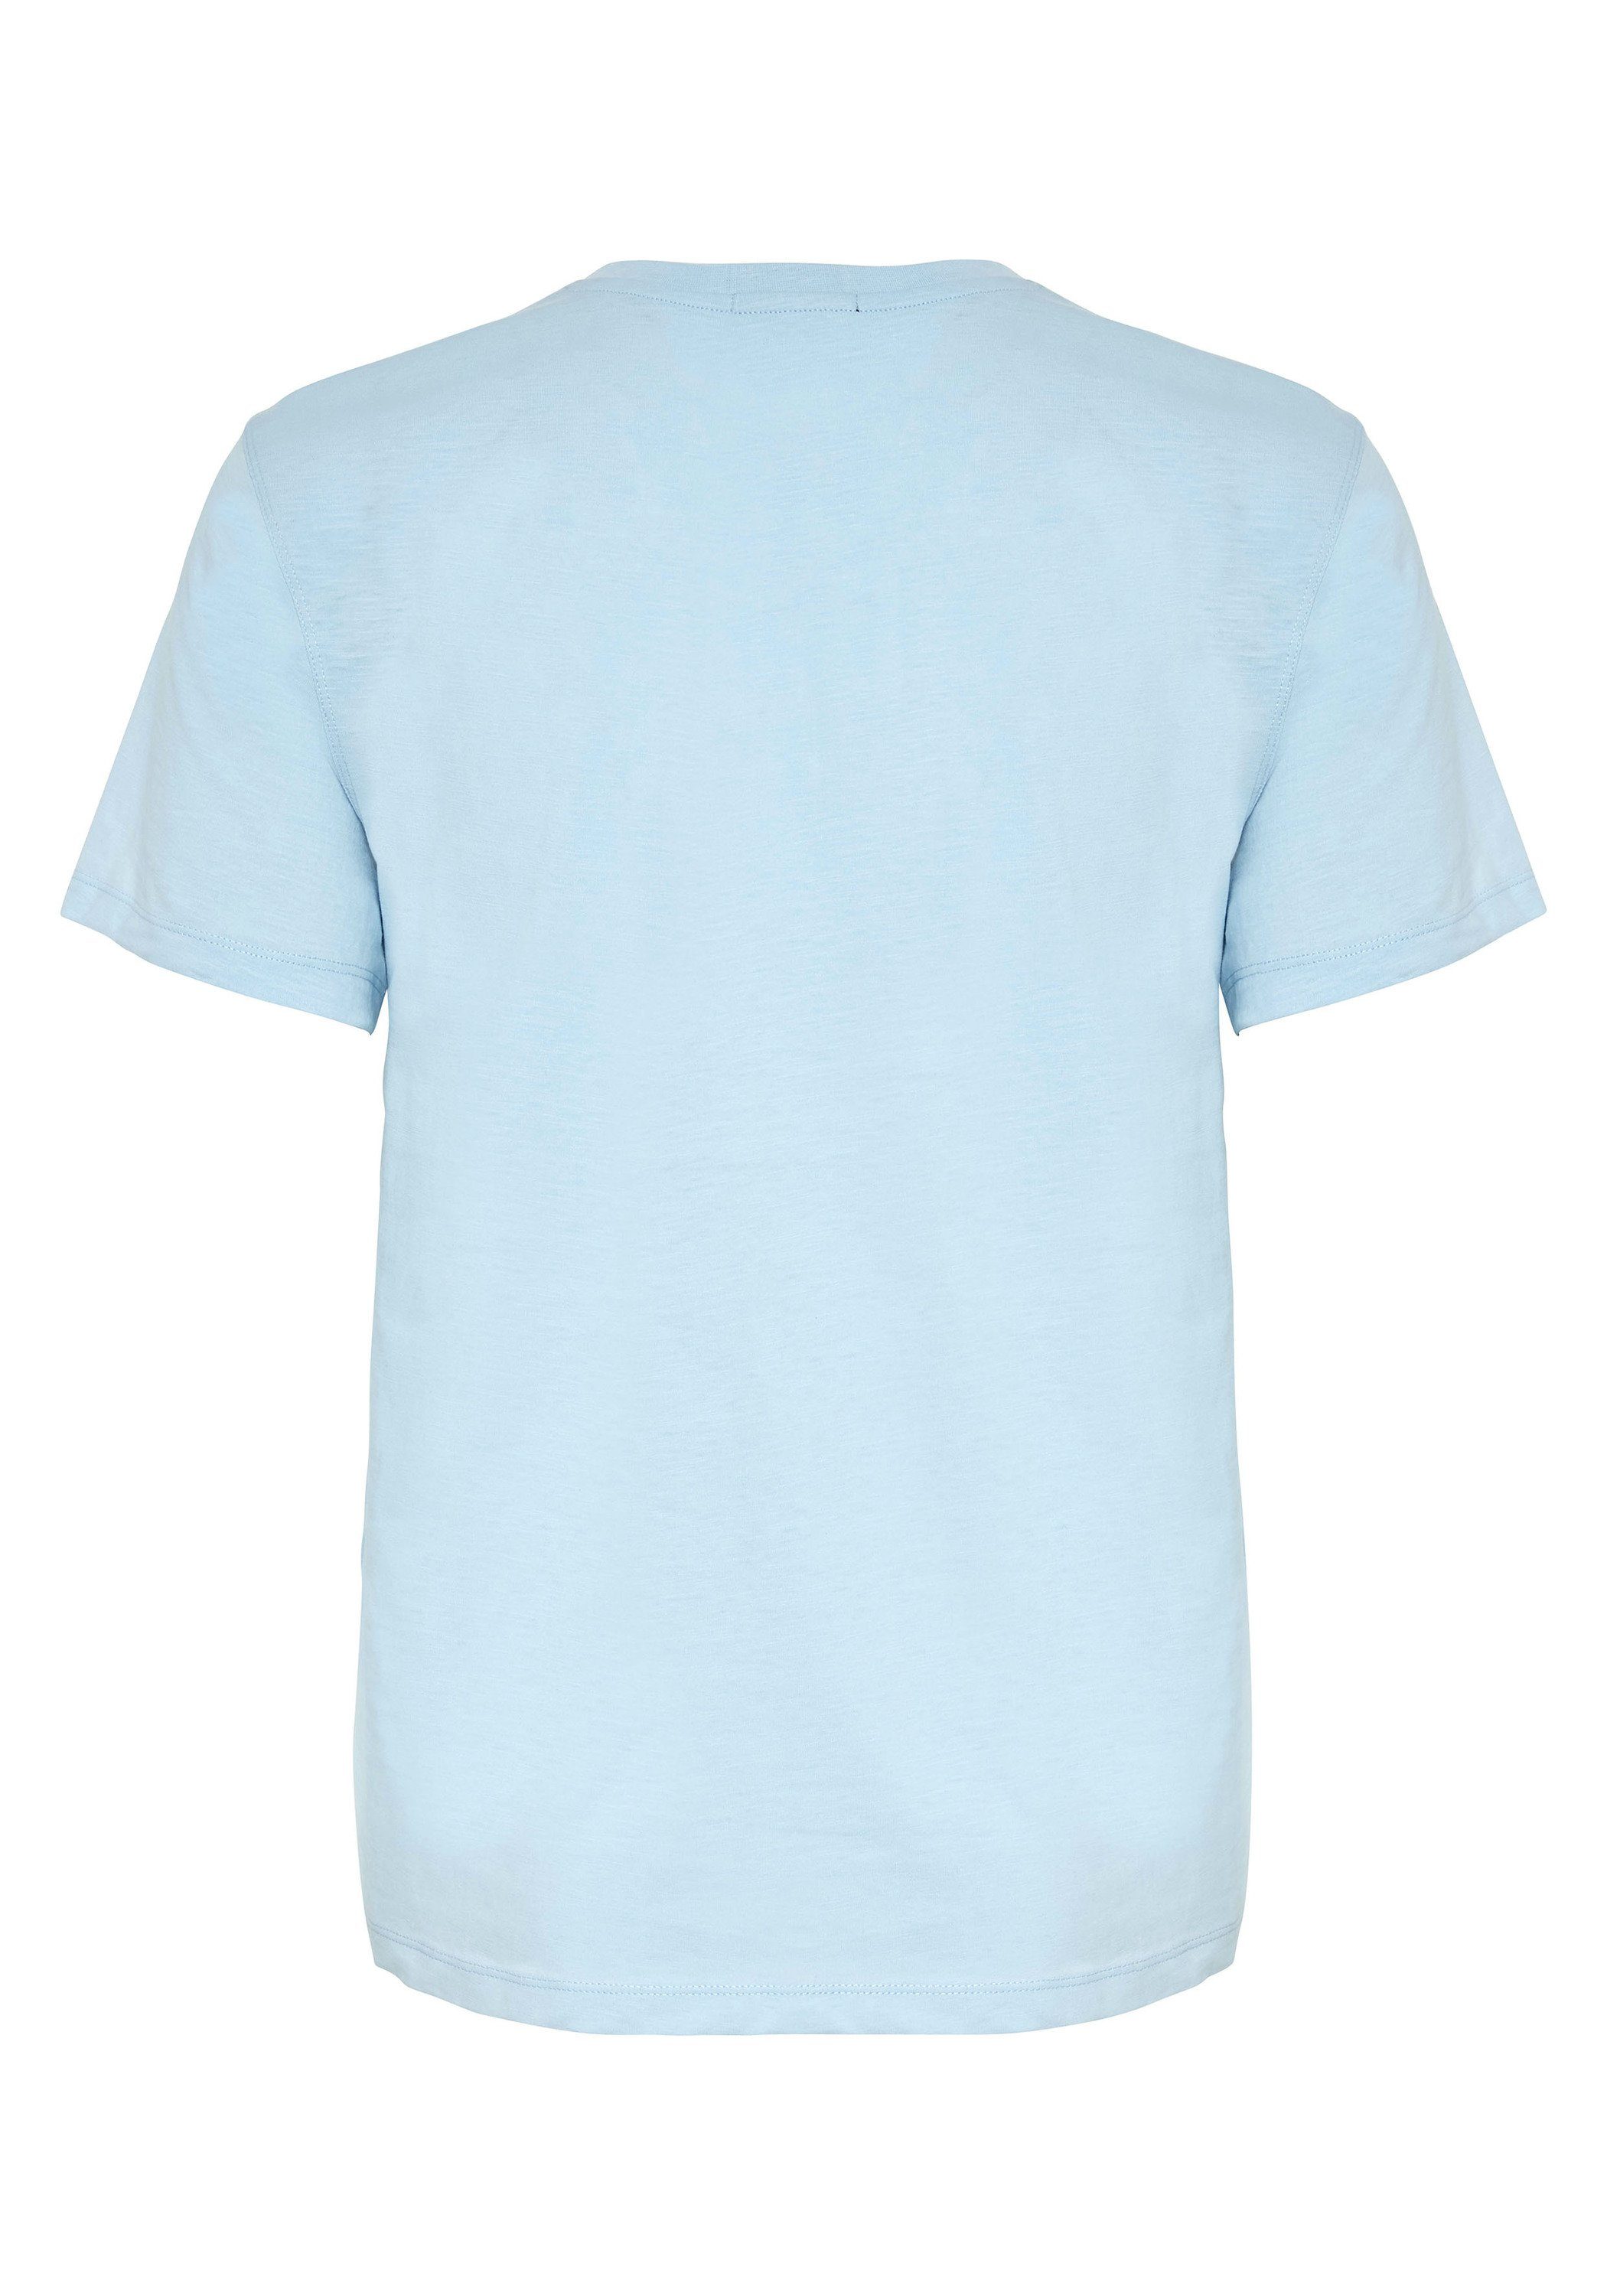 mit 1 gedrucktem Coryda Label-Symbol Print-Shirt T-Shirt Chiemsee Blue